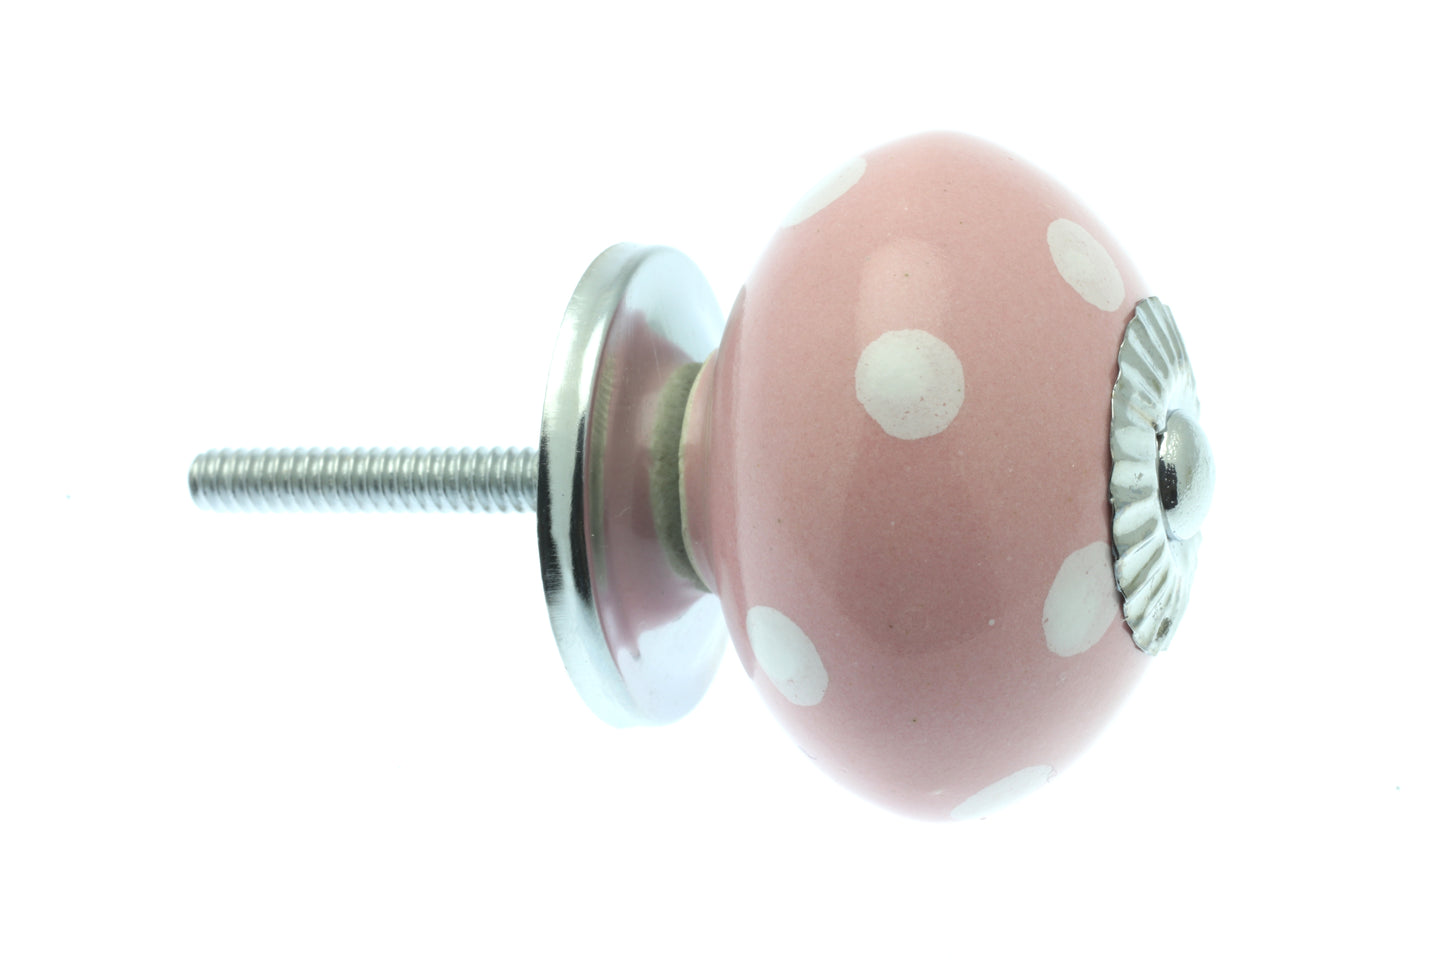 Round Ceramic Knob Pastel Pink with White Spots / Dots 40mm